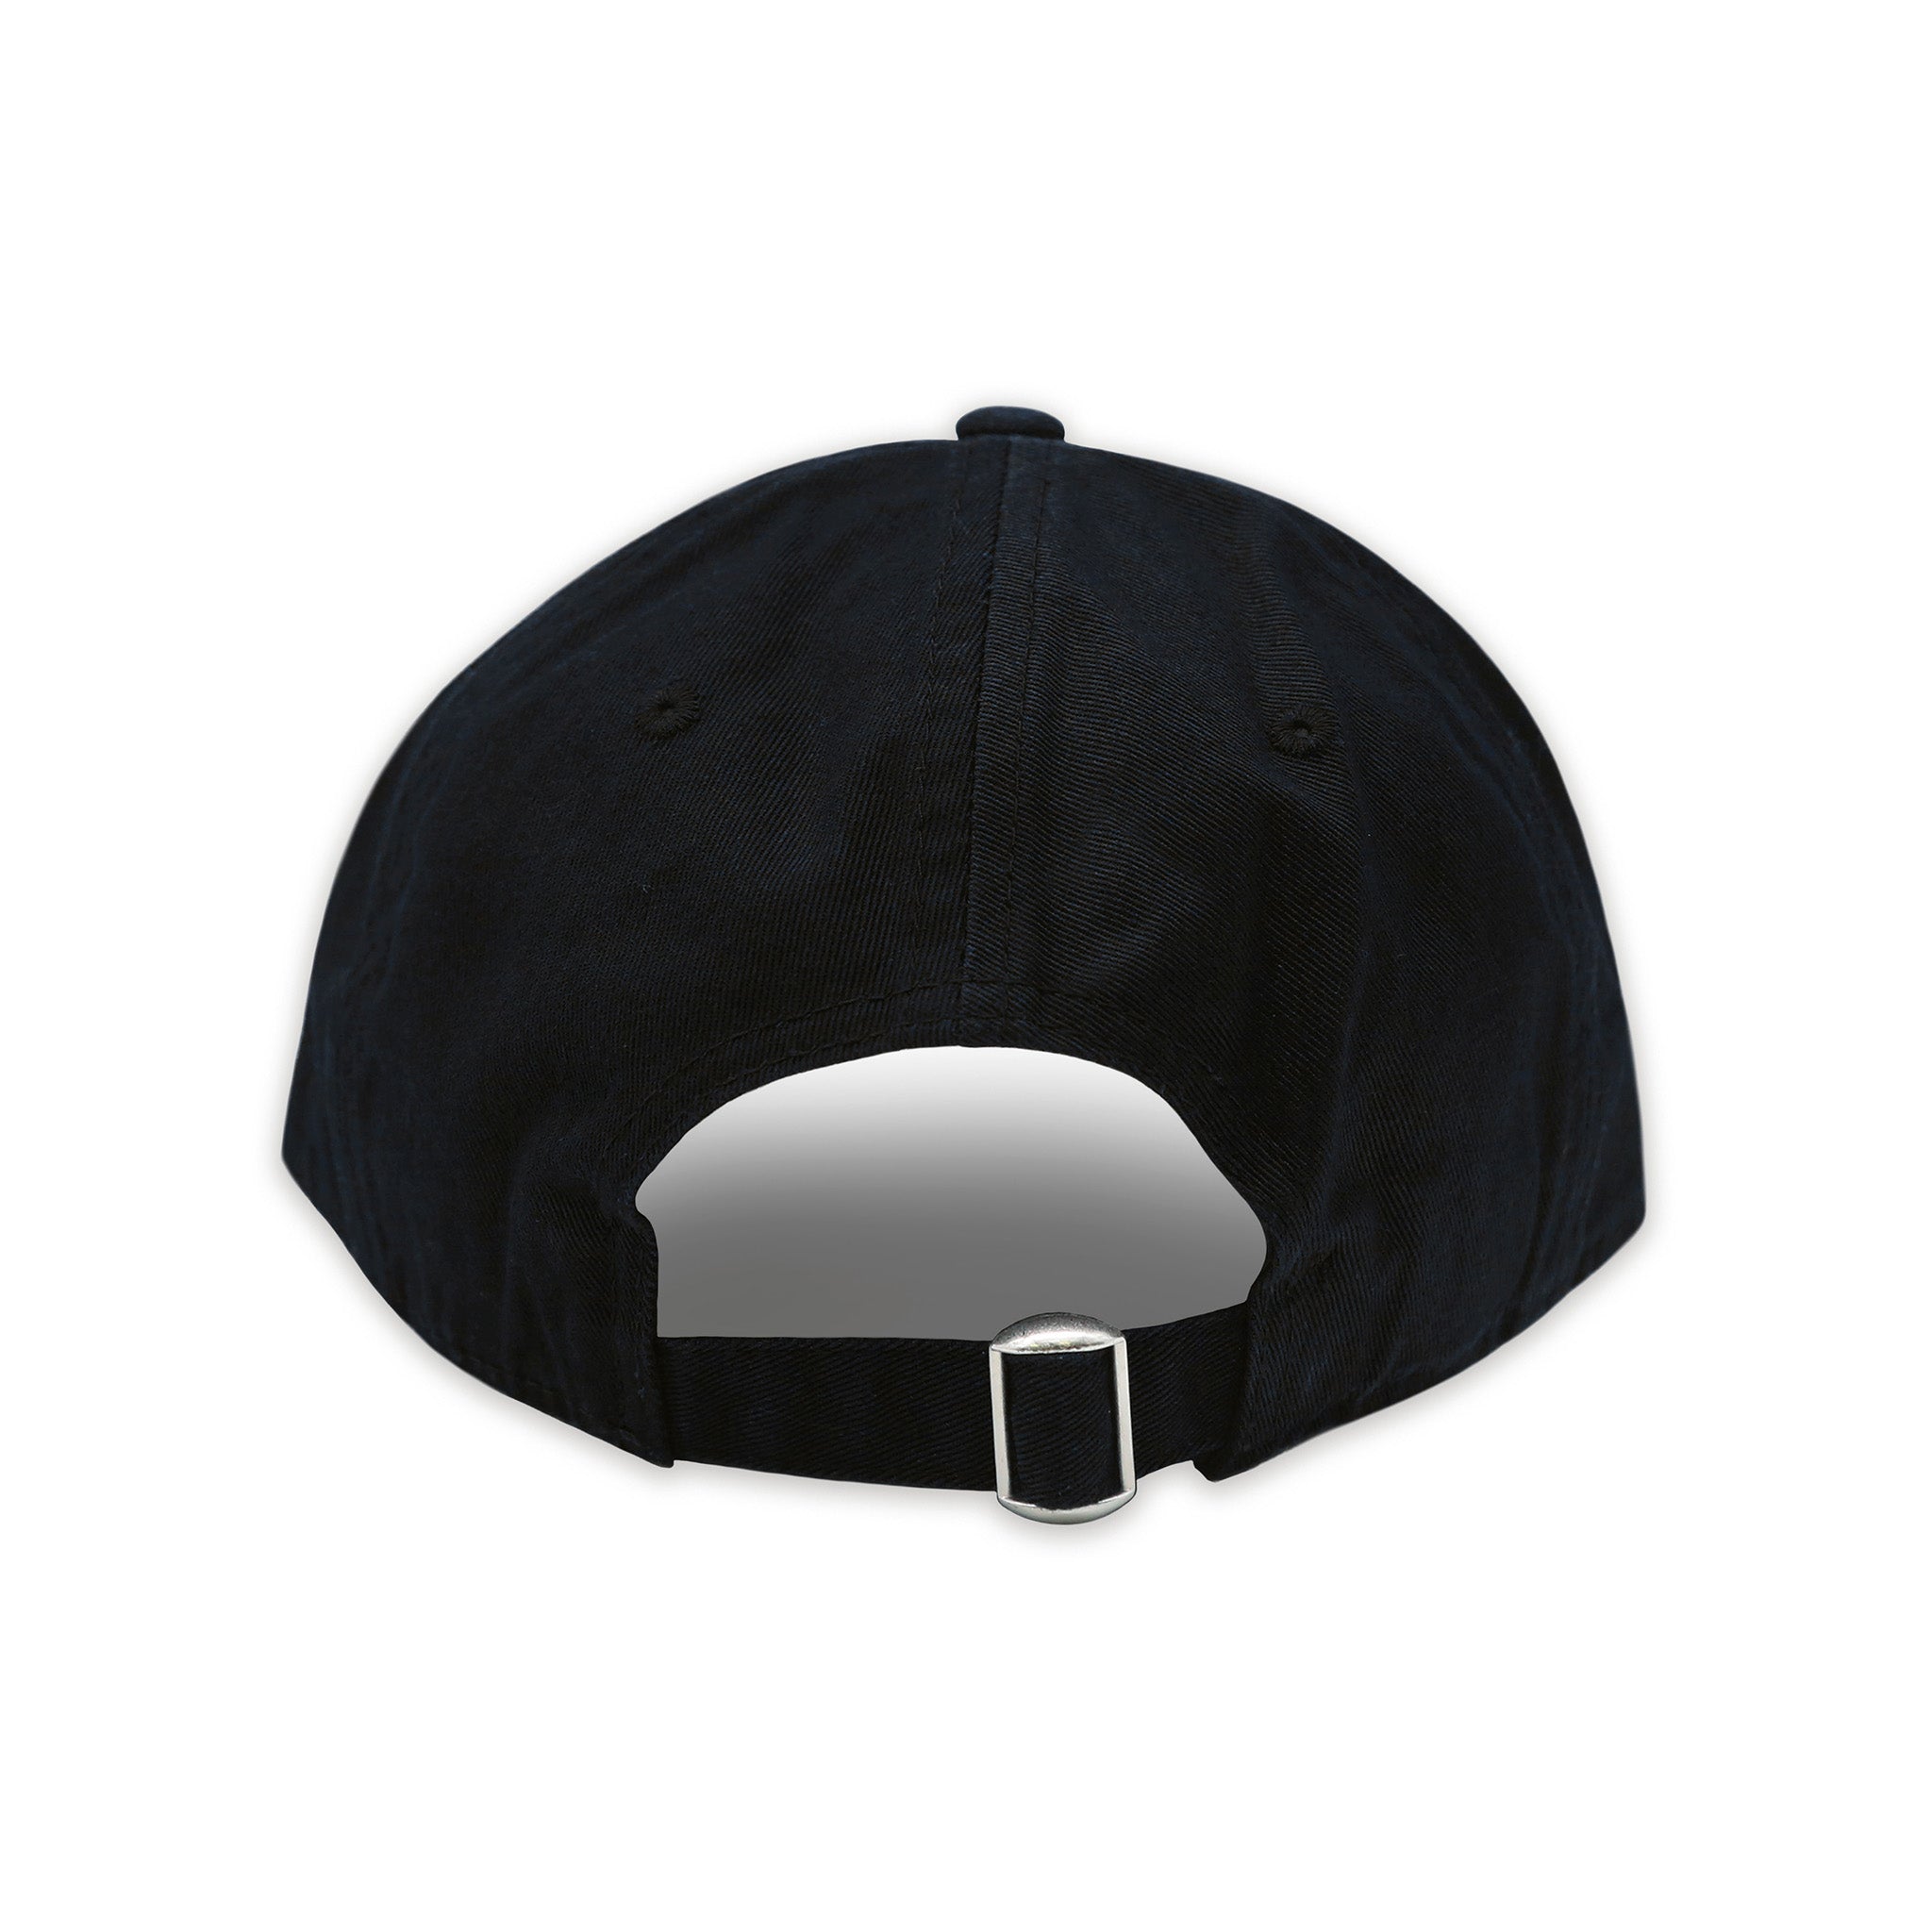 Purdue Hat (Black)